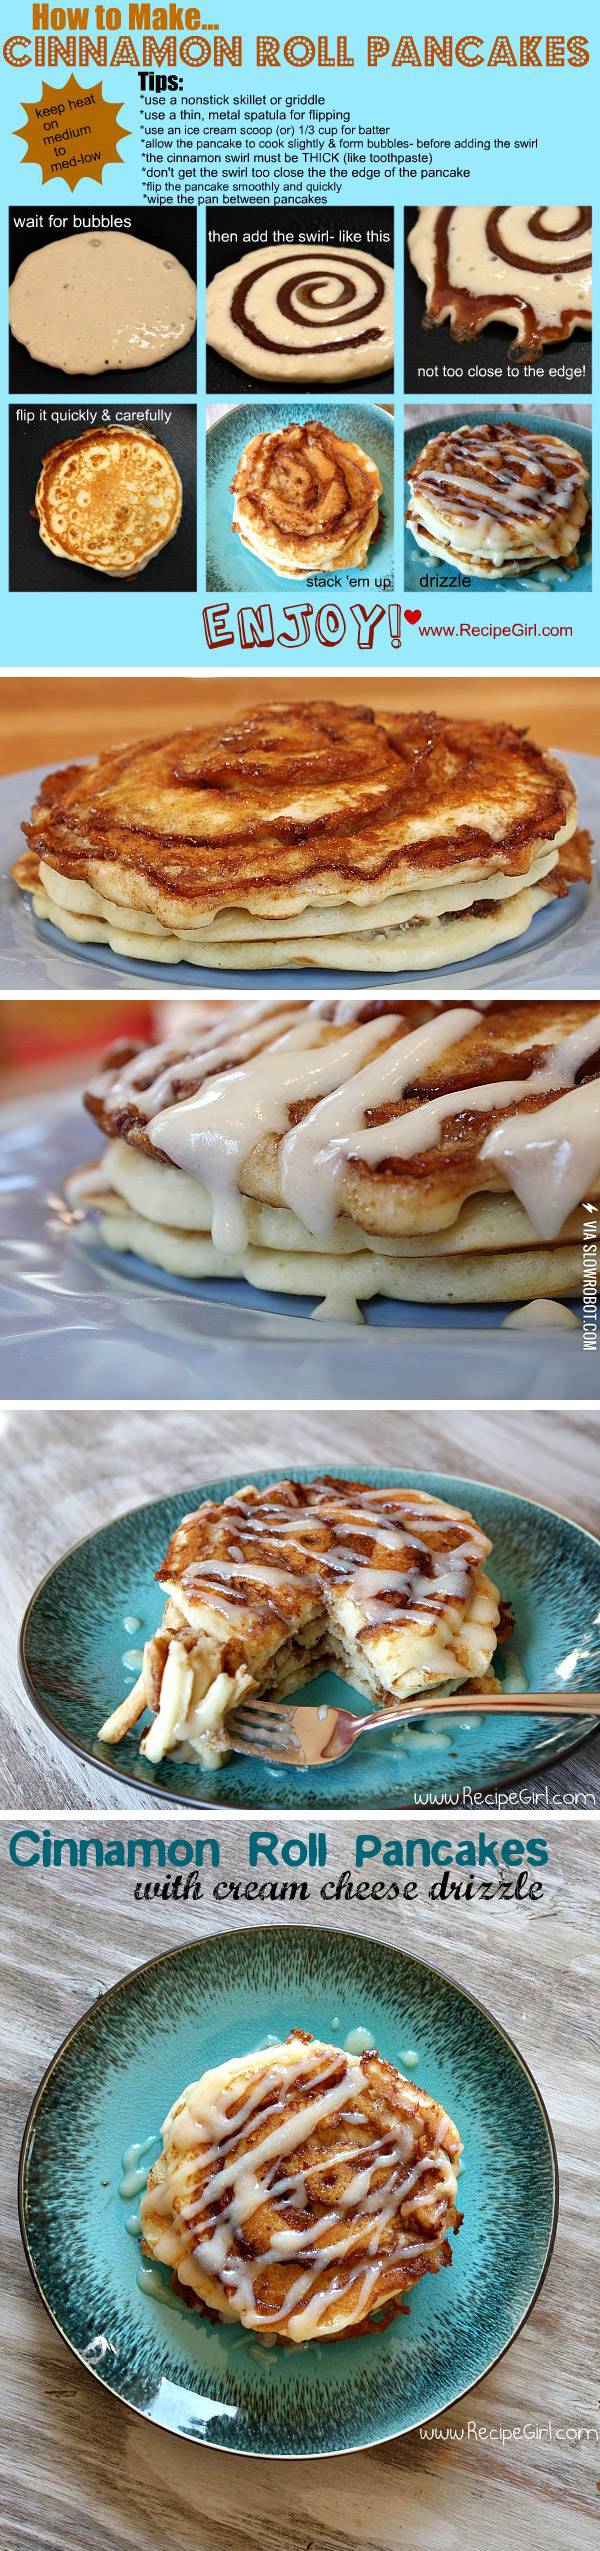 How+to+make+cinnamon+roll+pancakes.